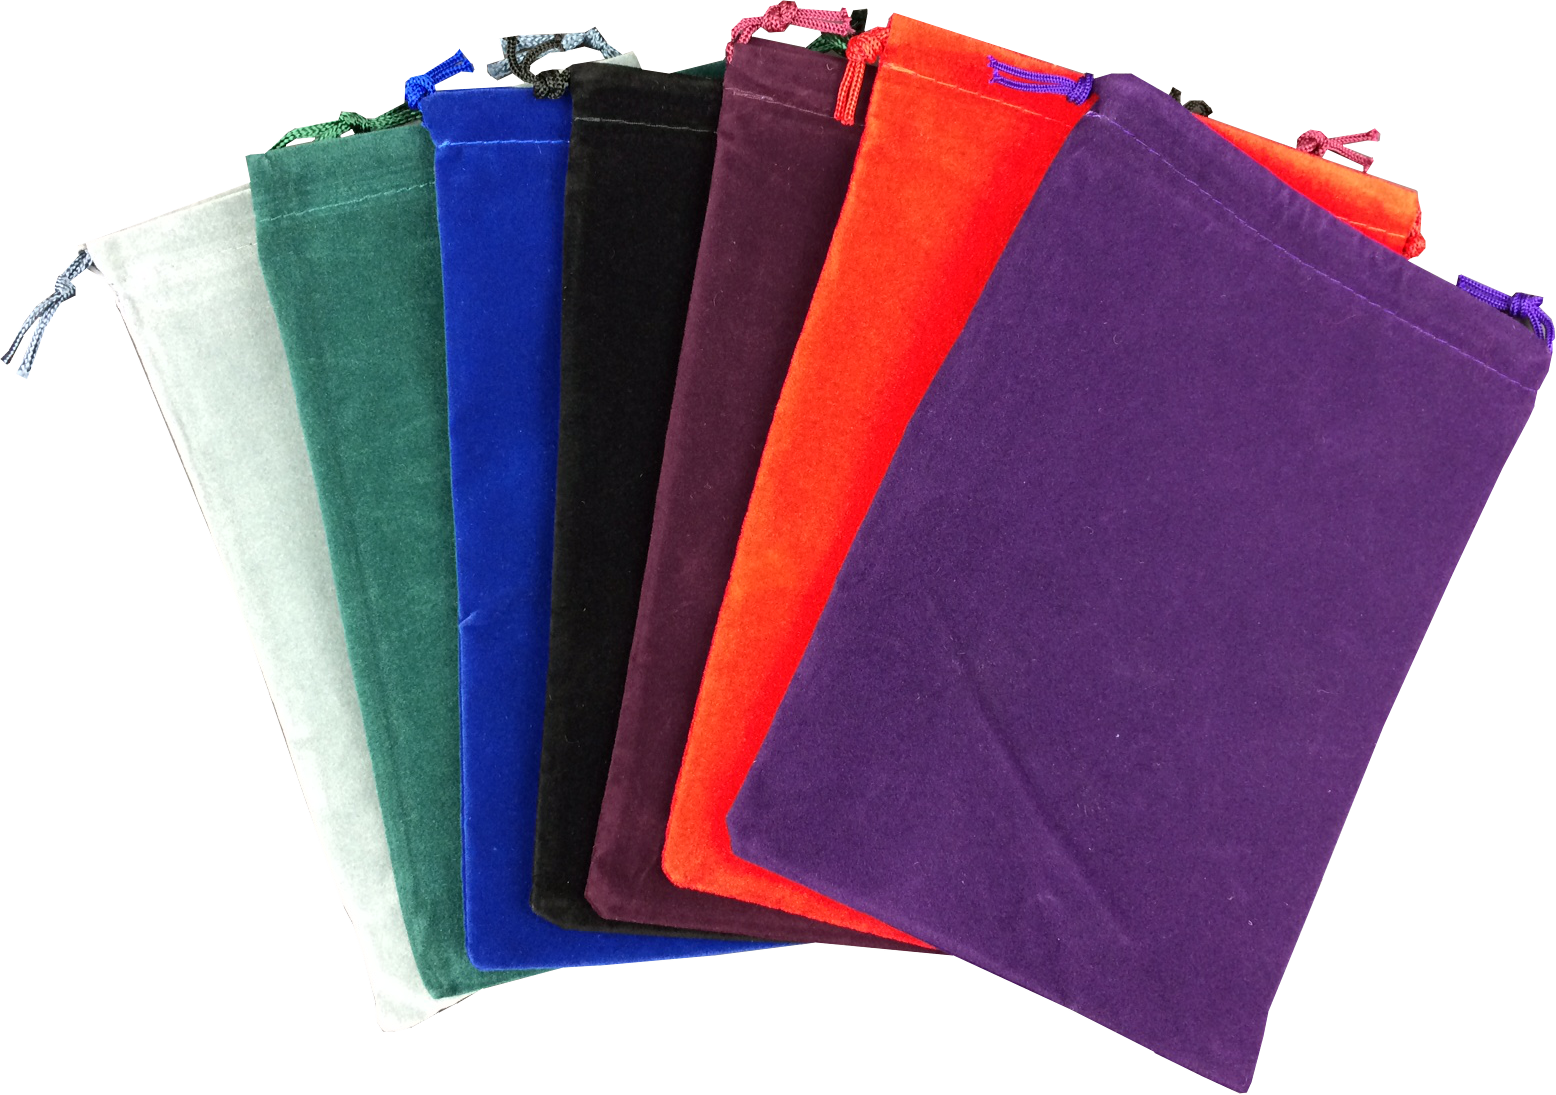 Dice Bag Suede - Large (multiple colors)